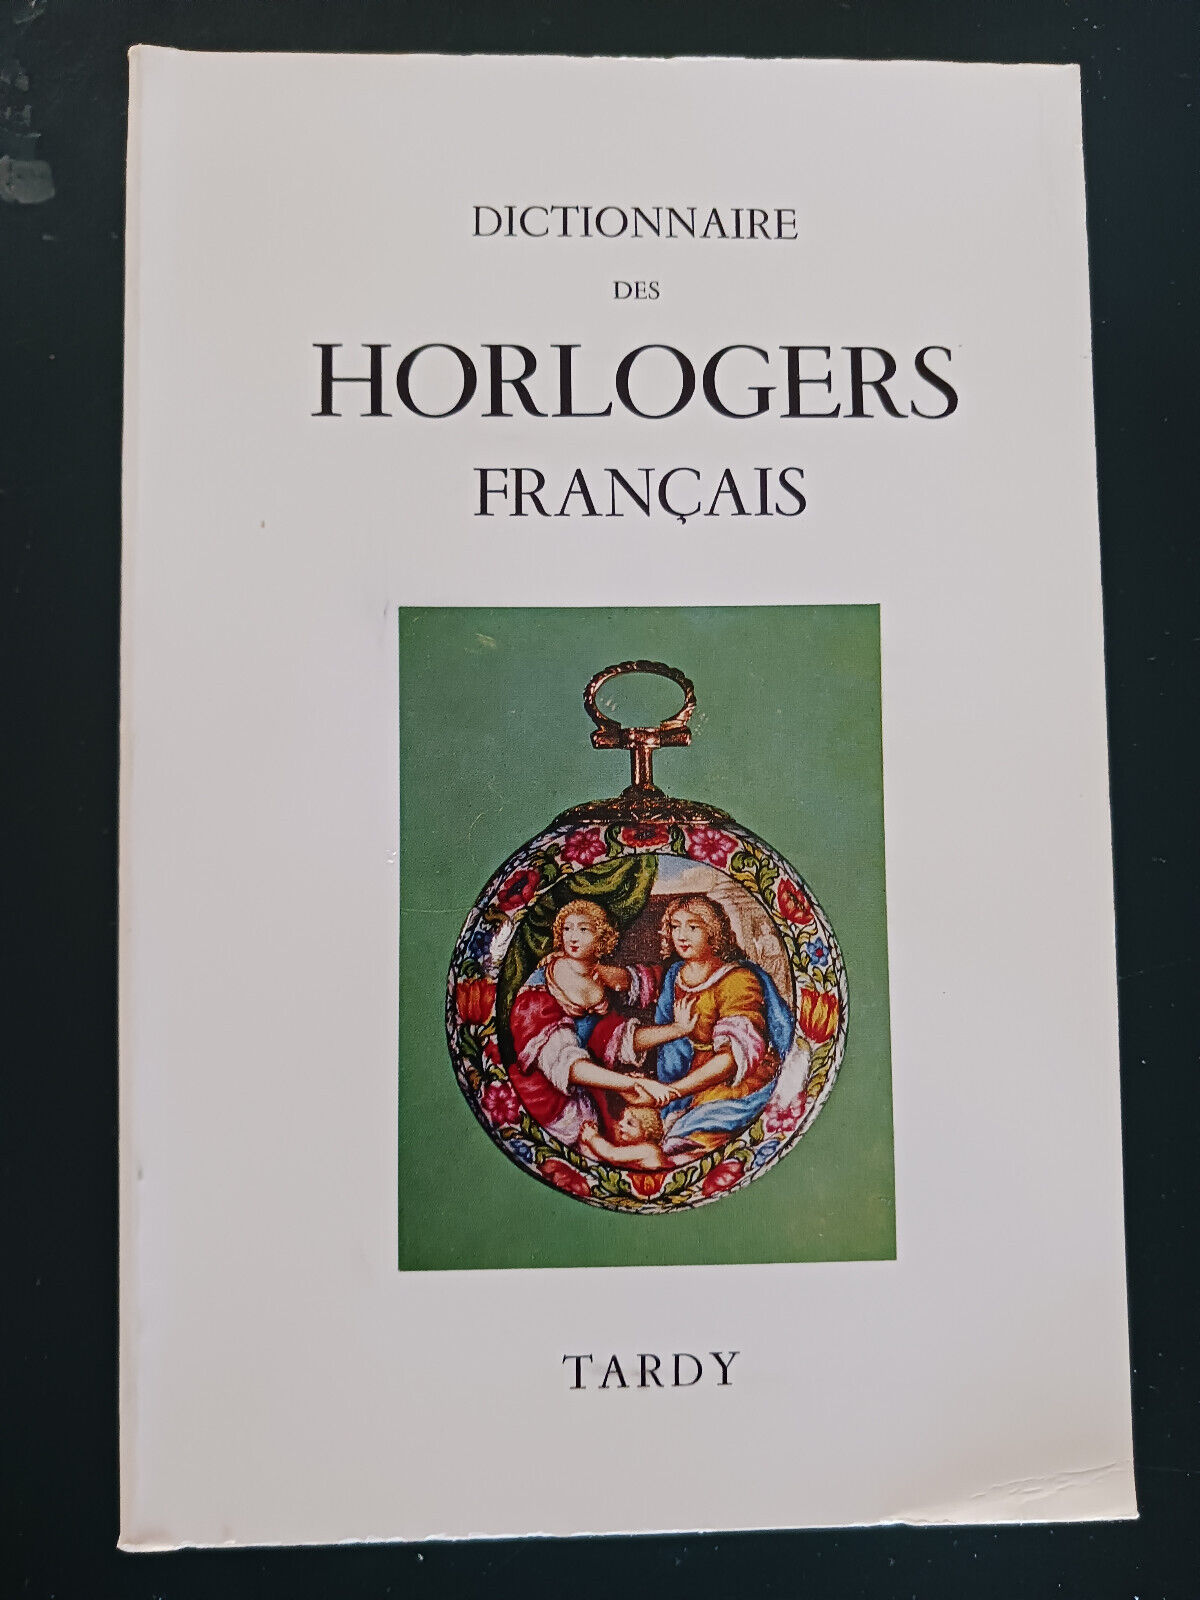 Dictionaire des Horologers Francaise, Tardy, c.1972, Rare